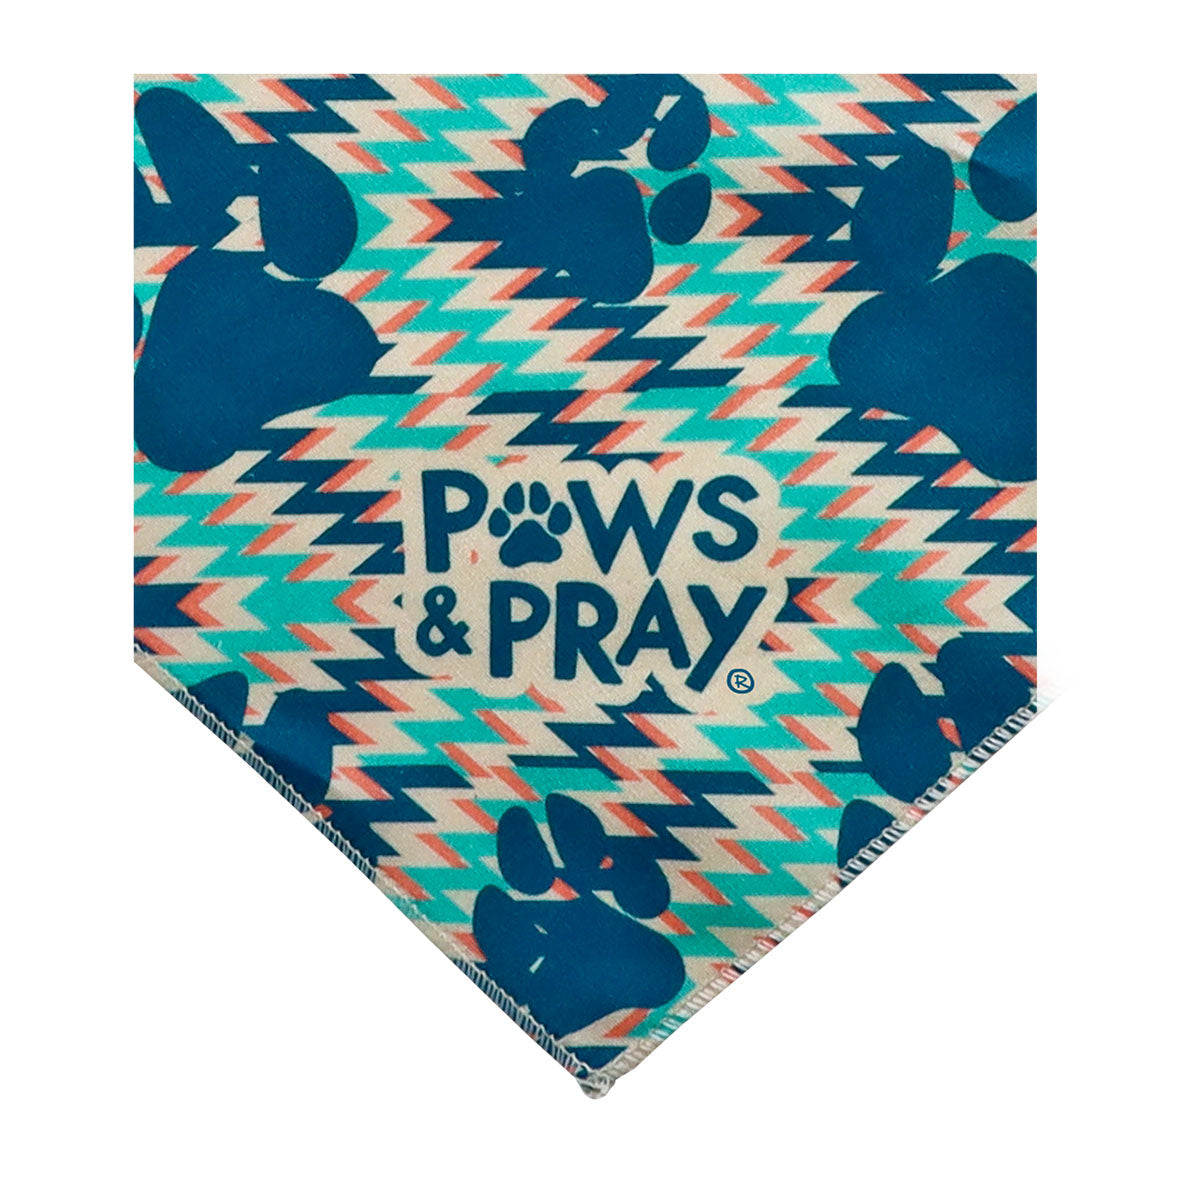 Paws & Pray Paws Pet Bandana